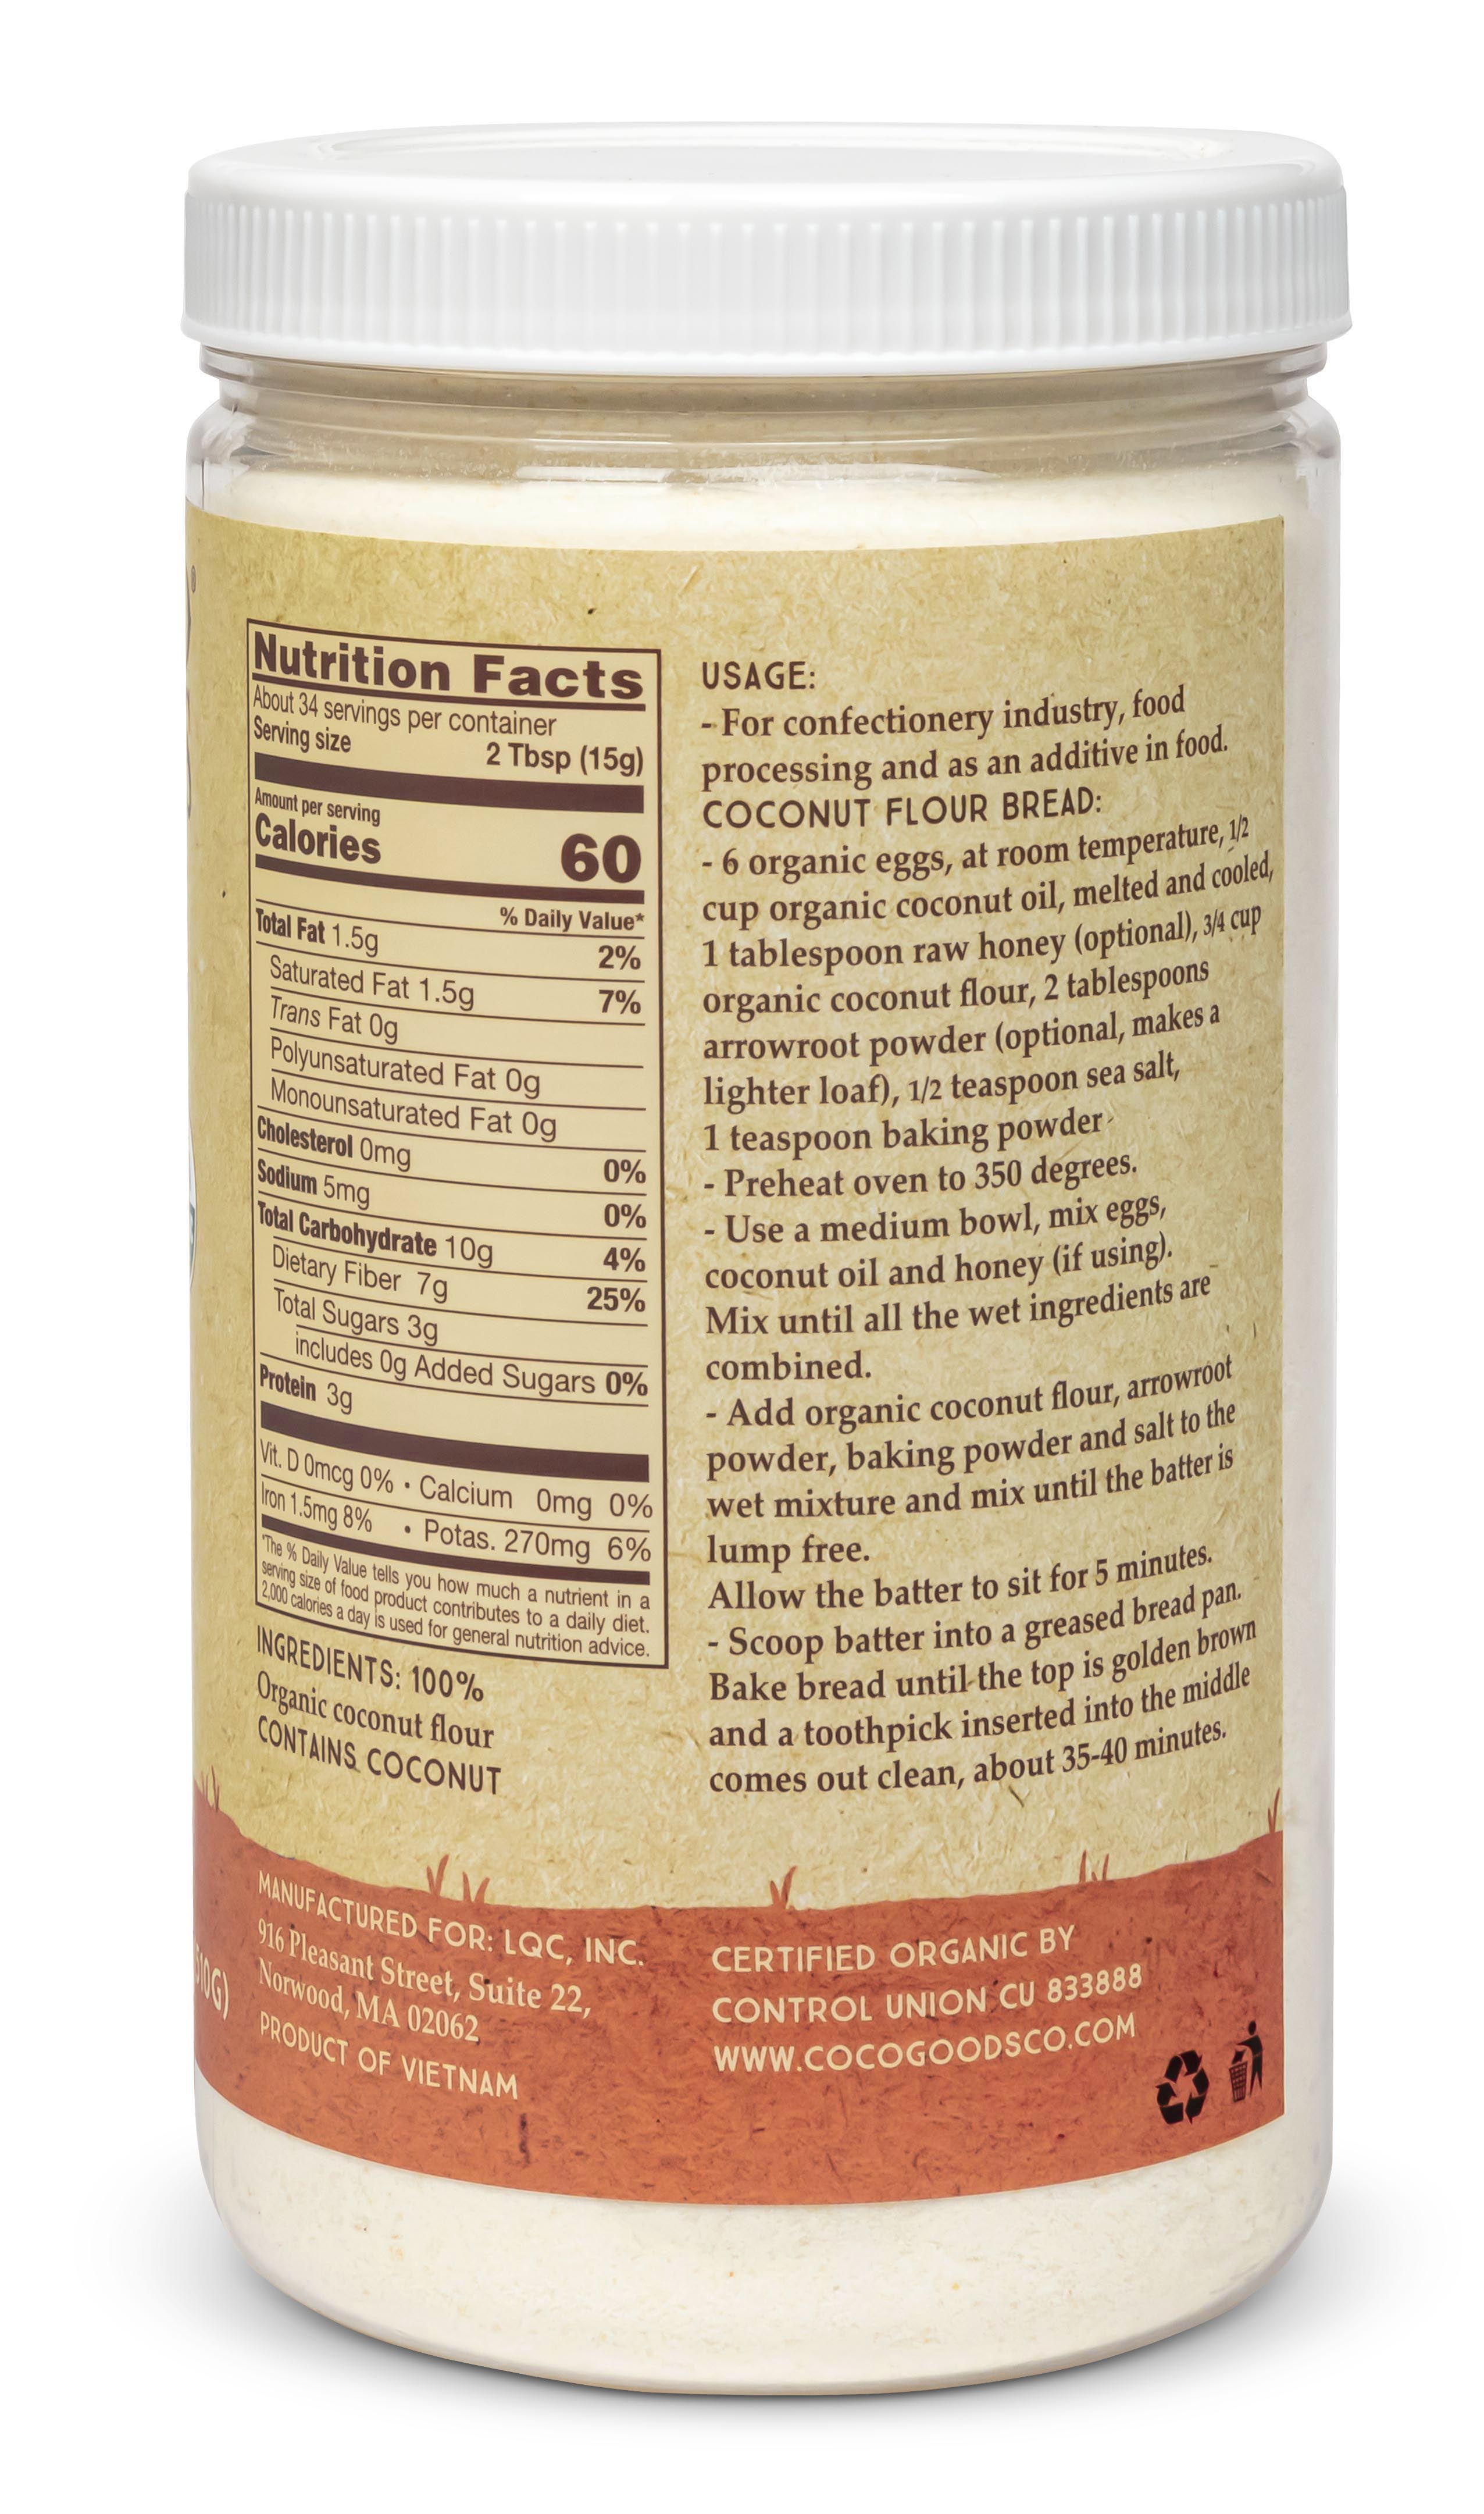 Organic Coconut Flour 18 oz, PET Jar